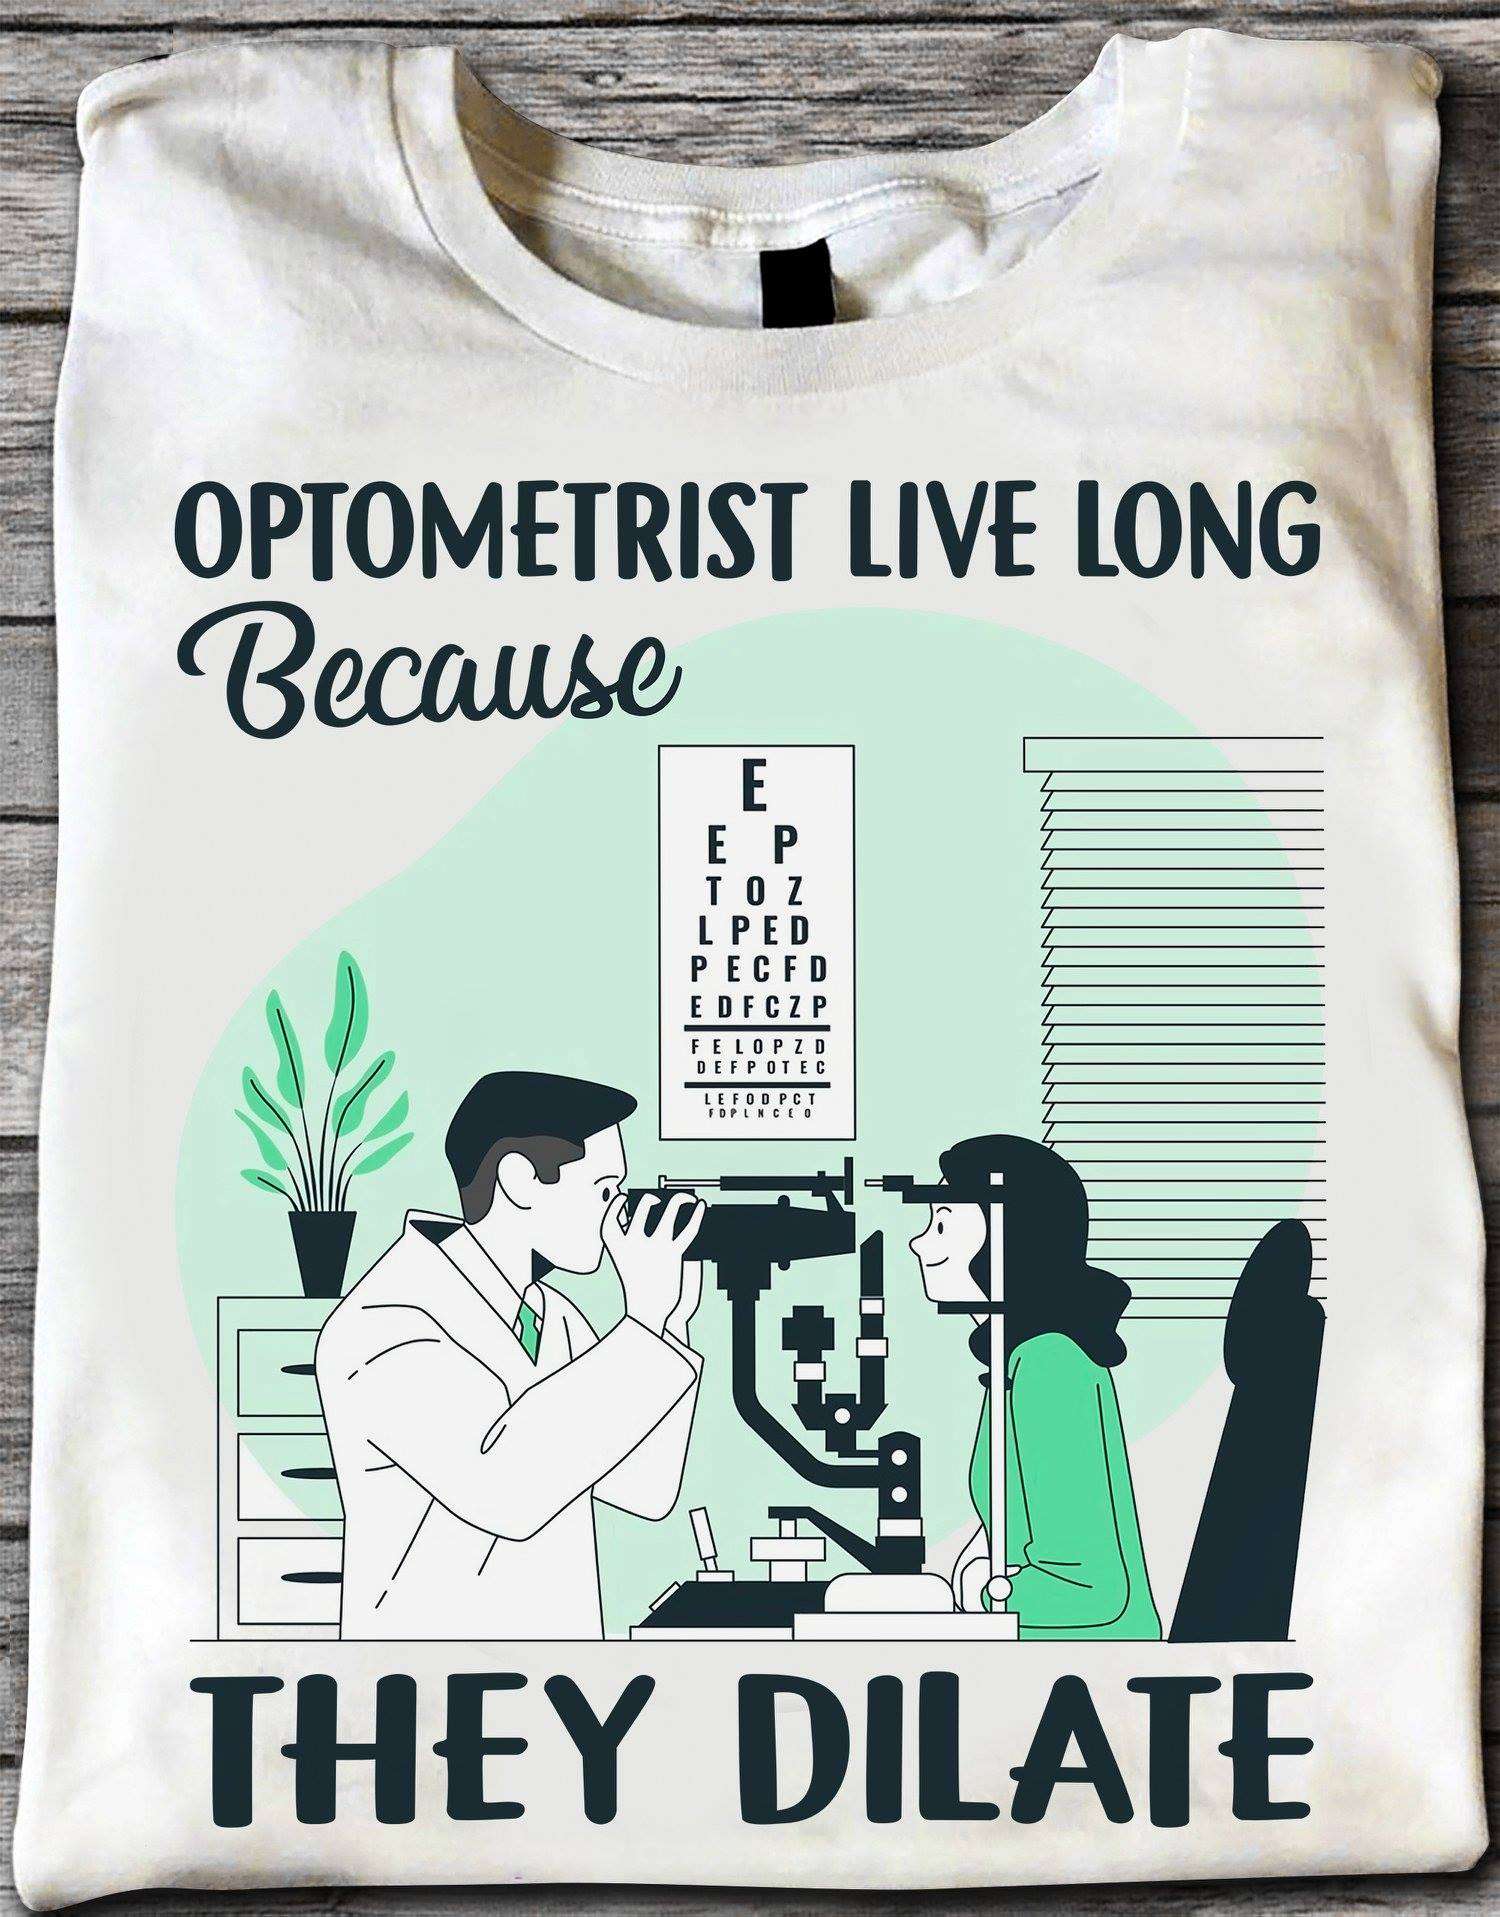 Optometrist live long because they dilate - Optometrist doctor, eye doctor